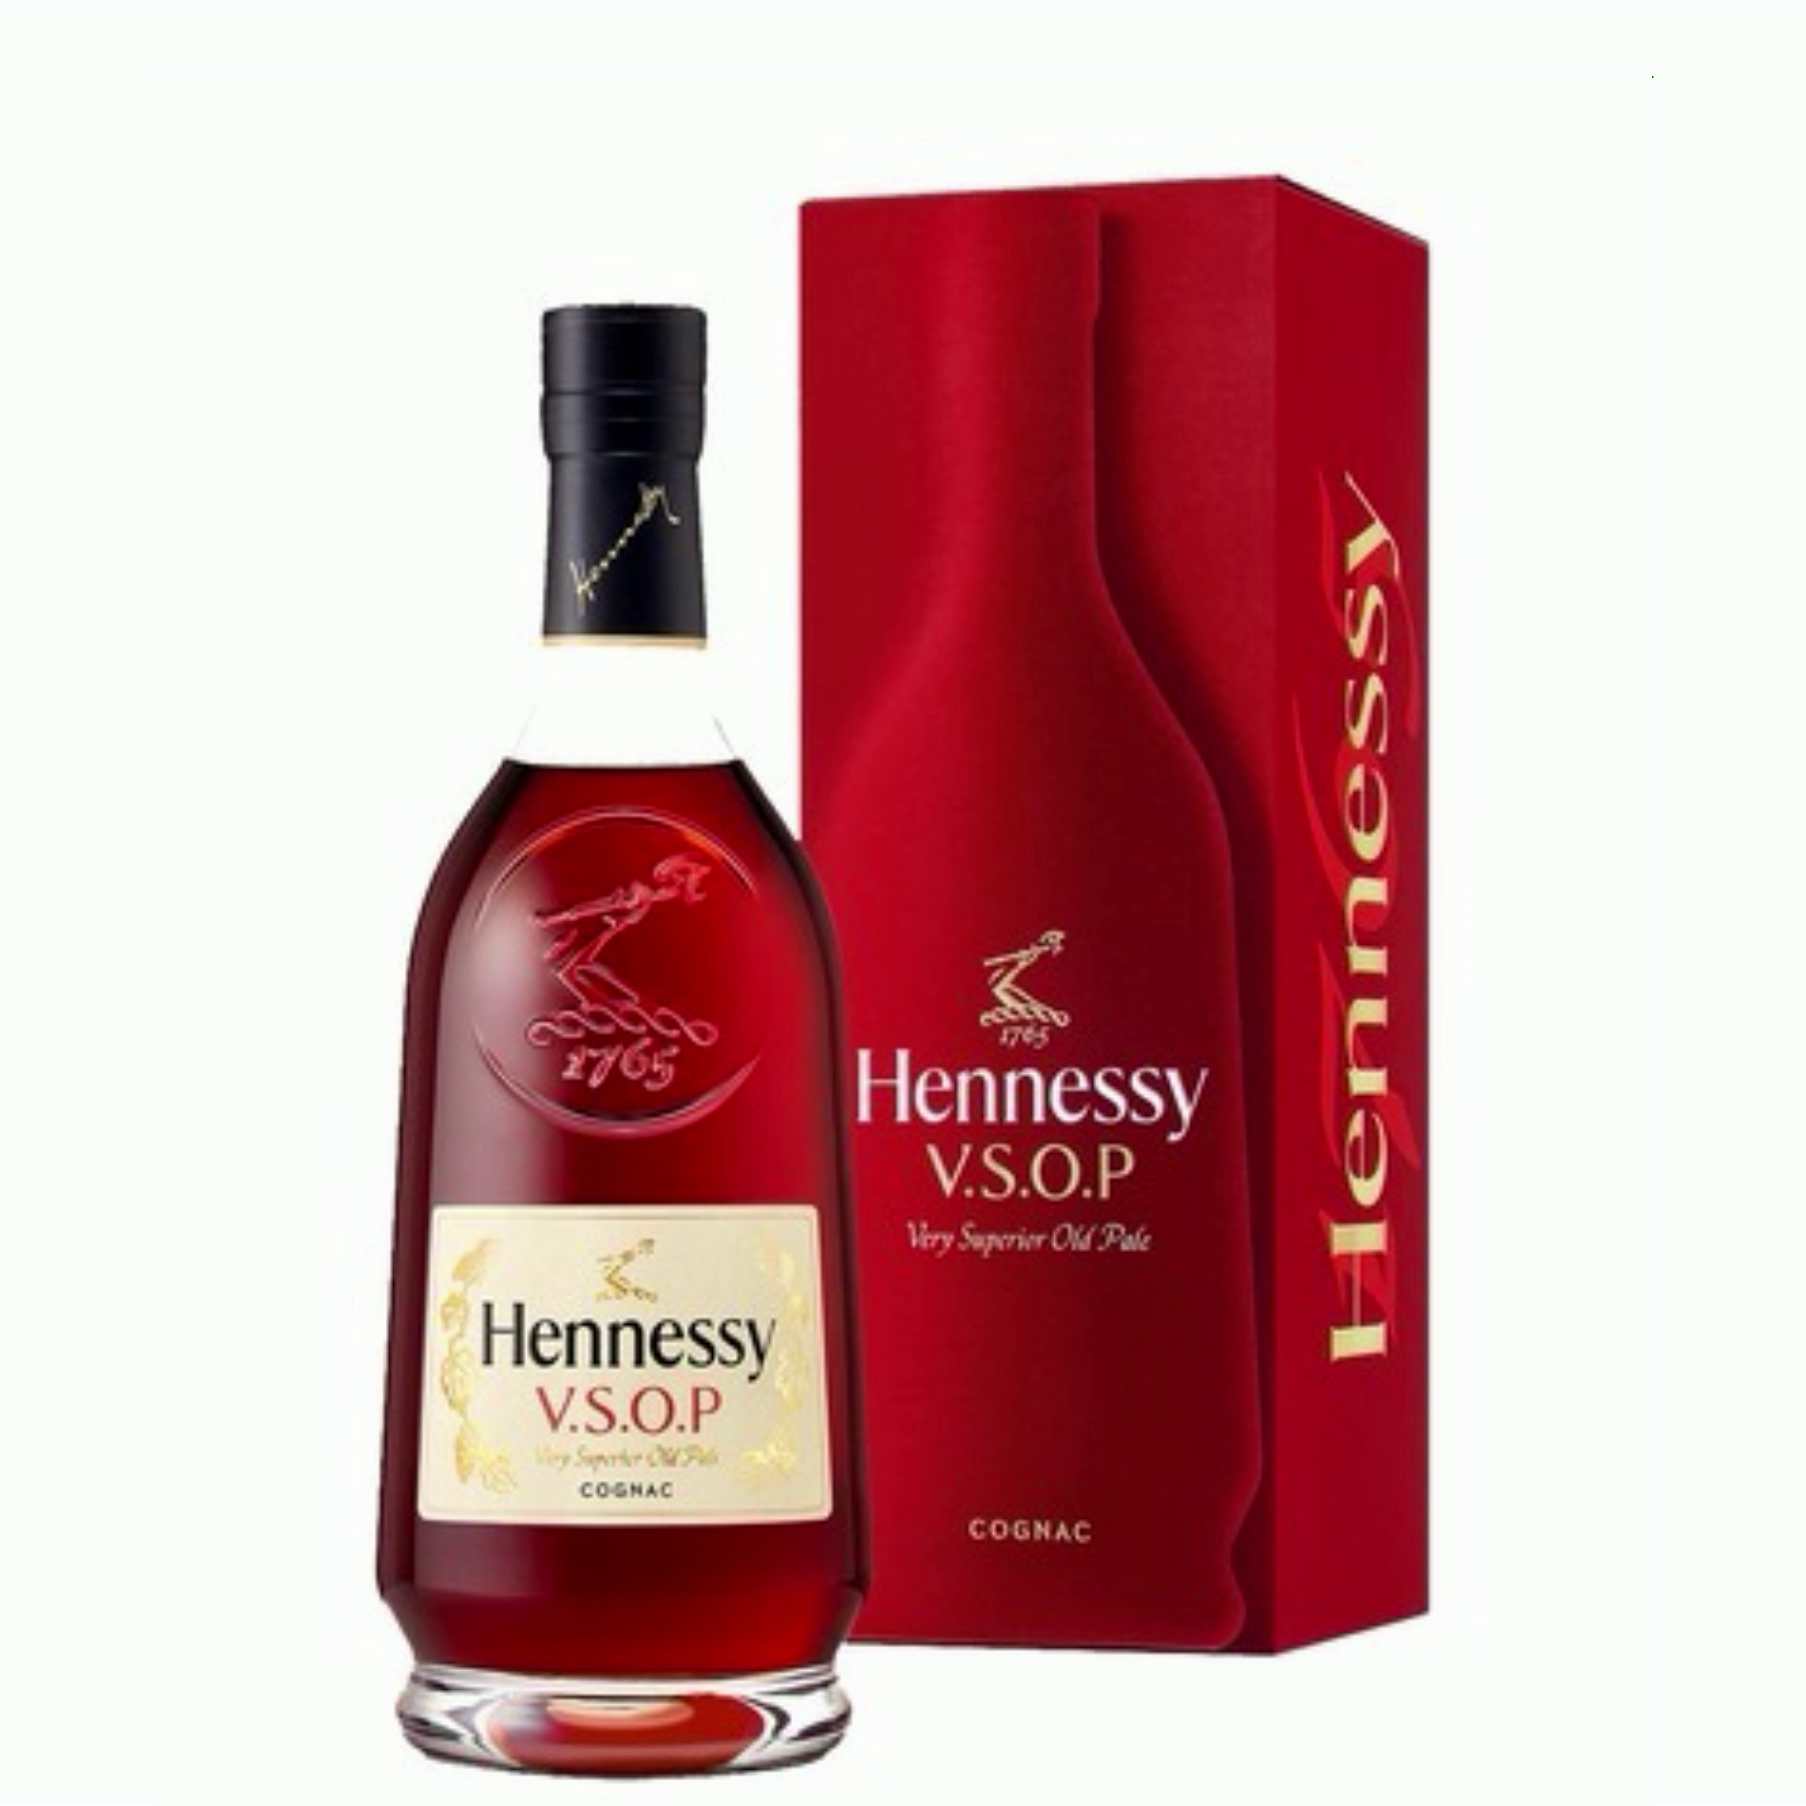 Hennessy Privilege VSOP Cognac 200ml